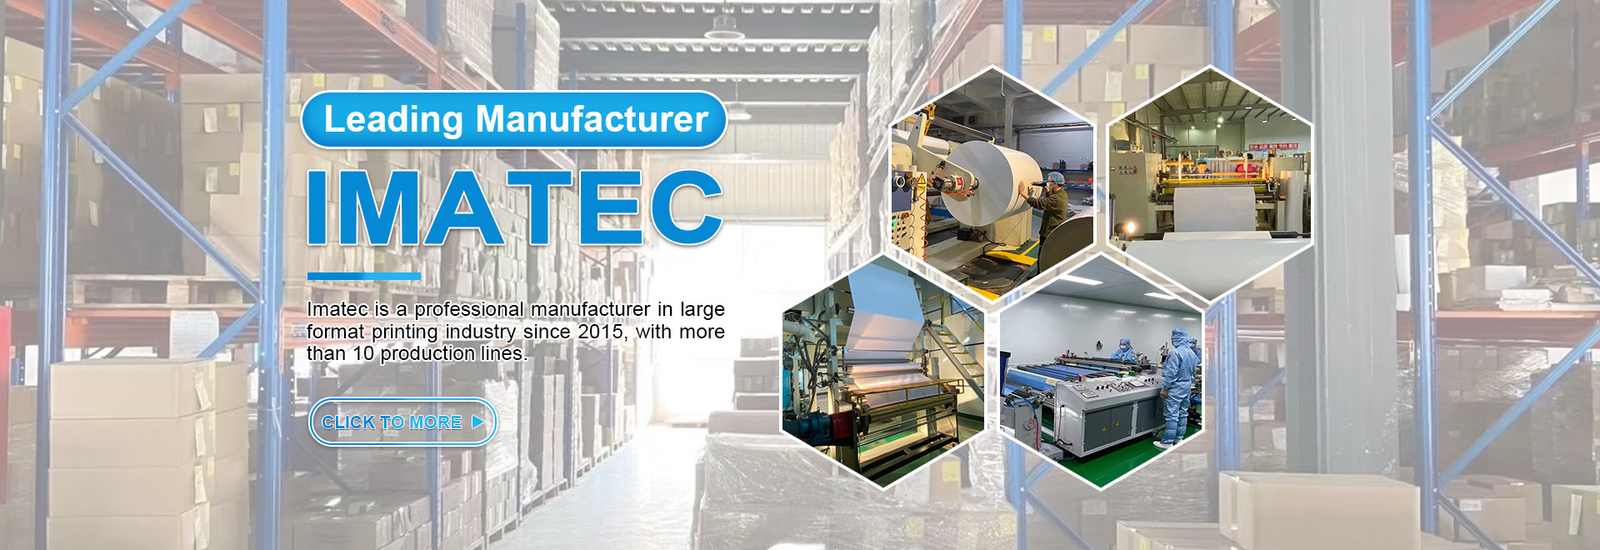 Imatec Imaging Co., Ltd. üretici üretim hattı